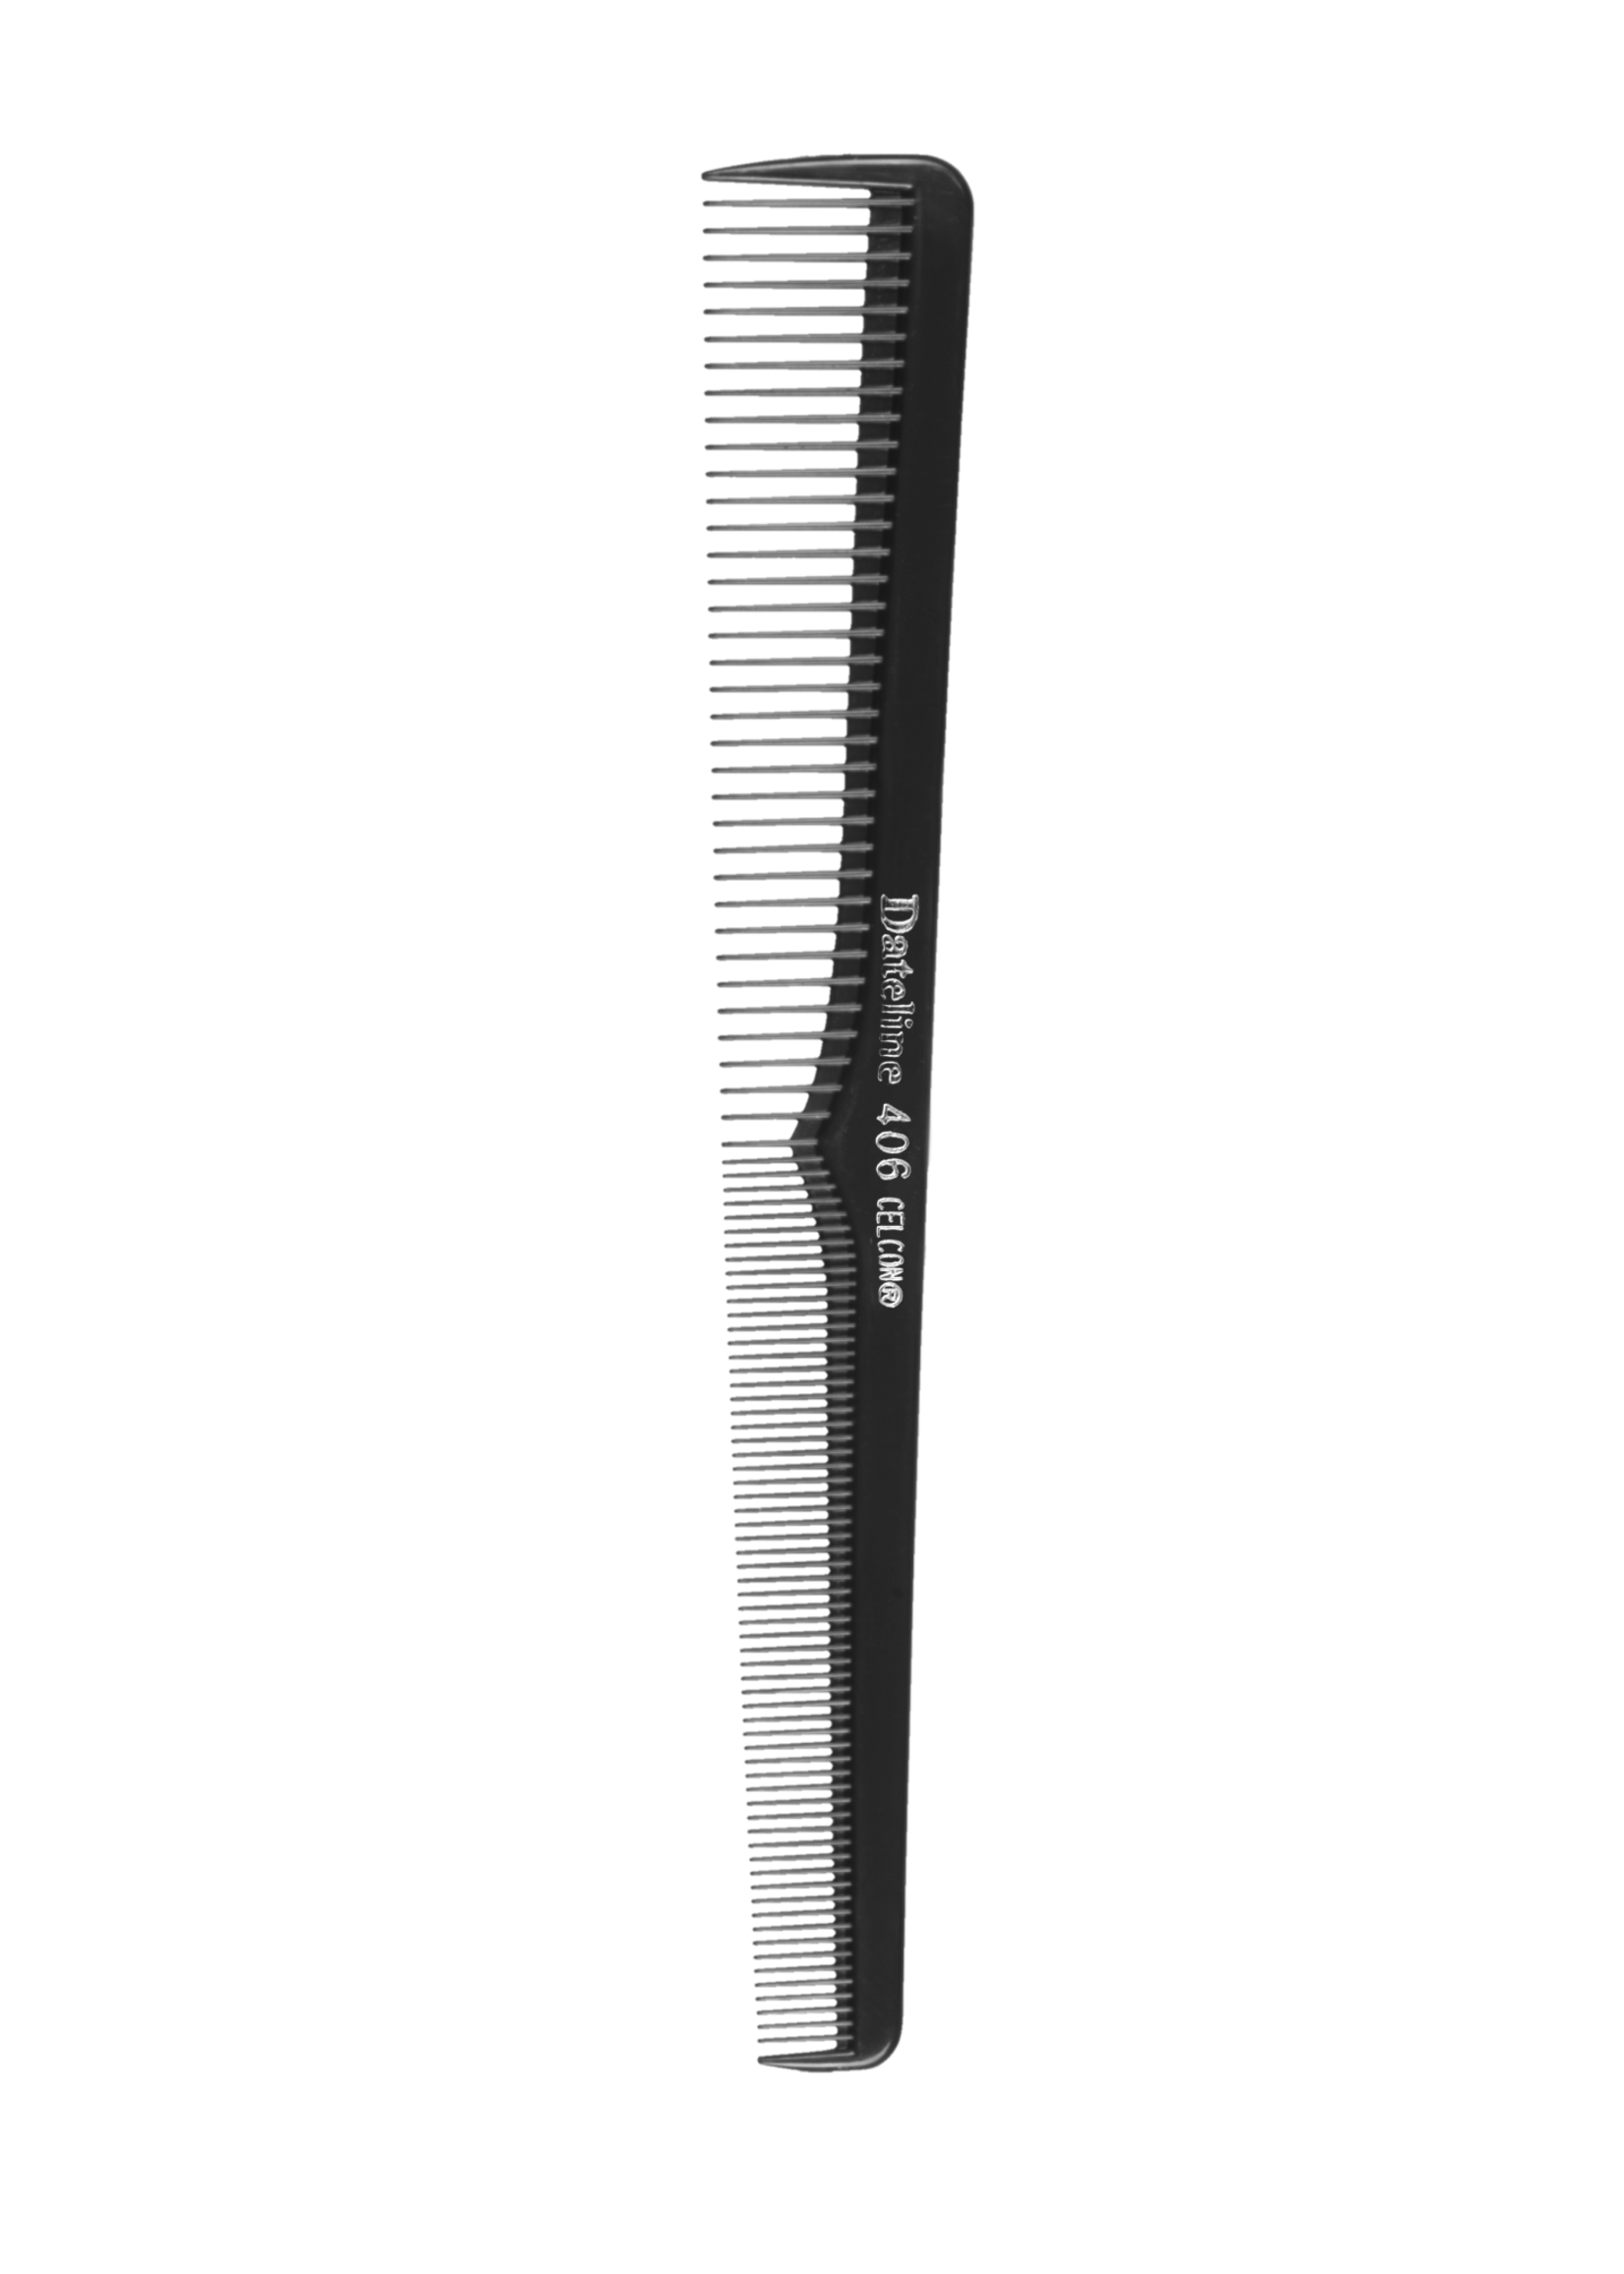 Dateline Dateline Black Celcon 406 Barber Comb